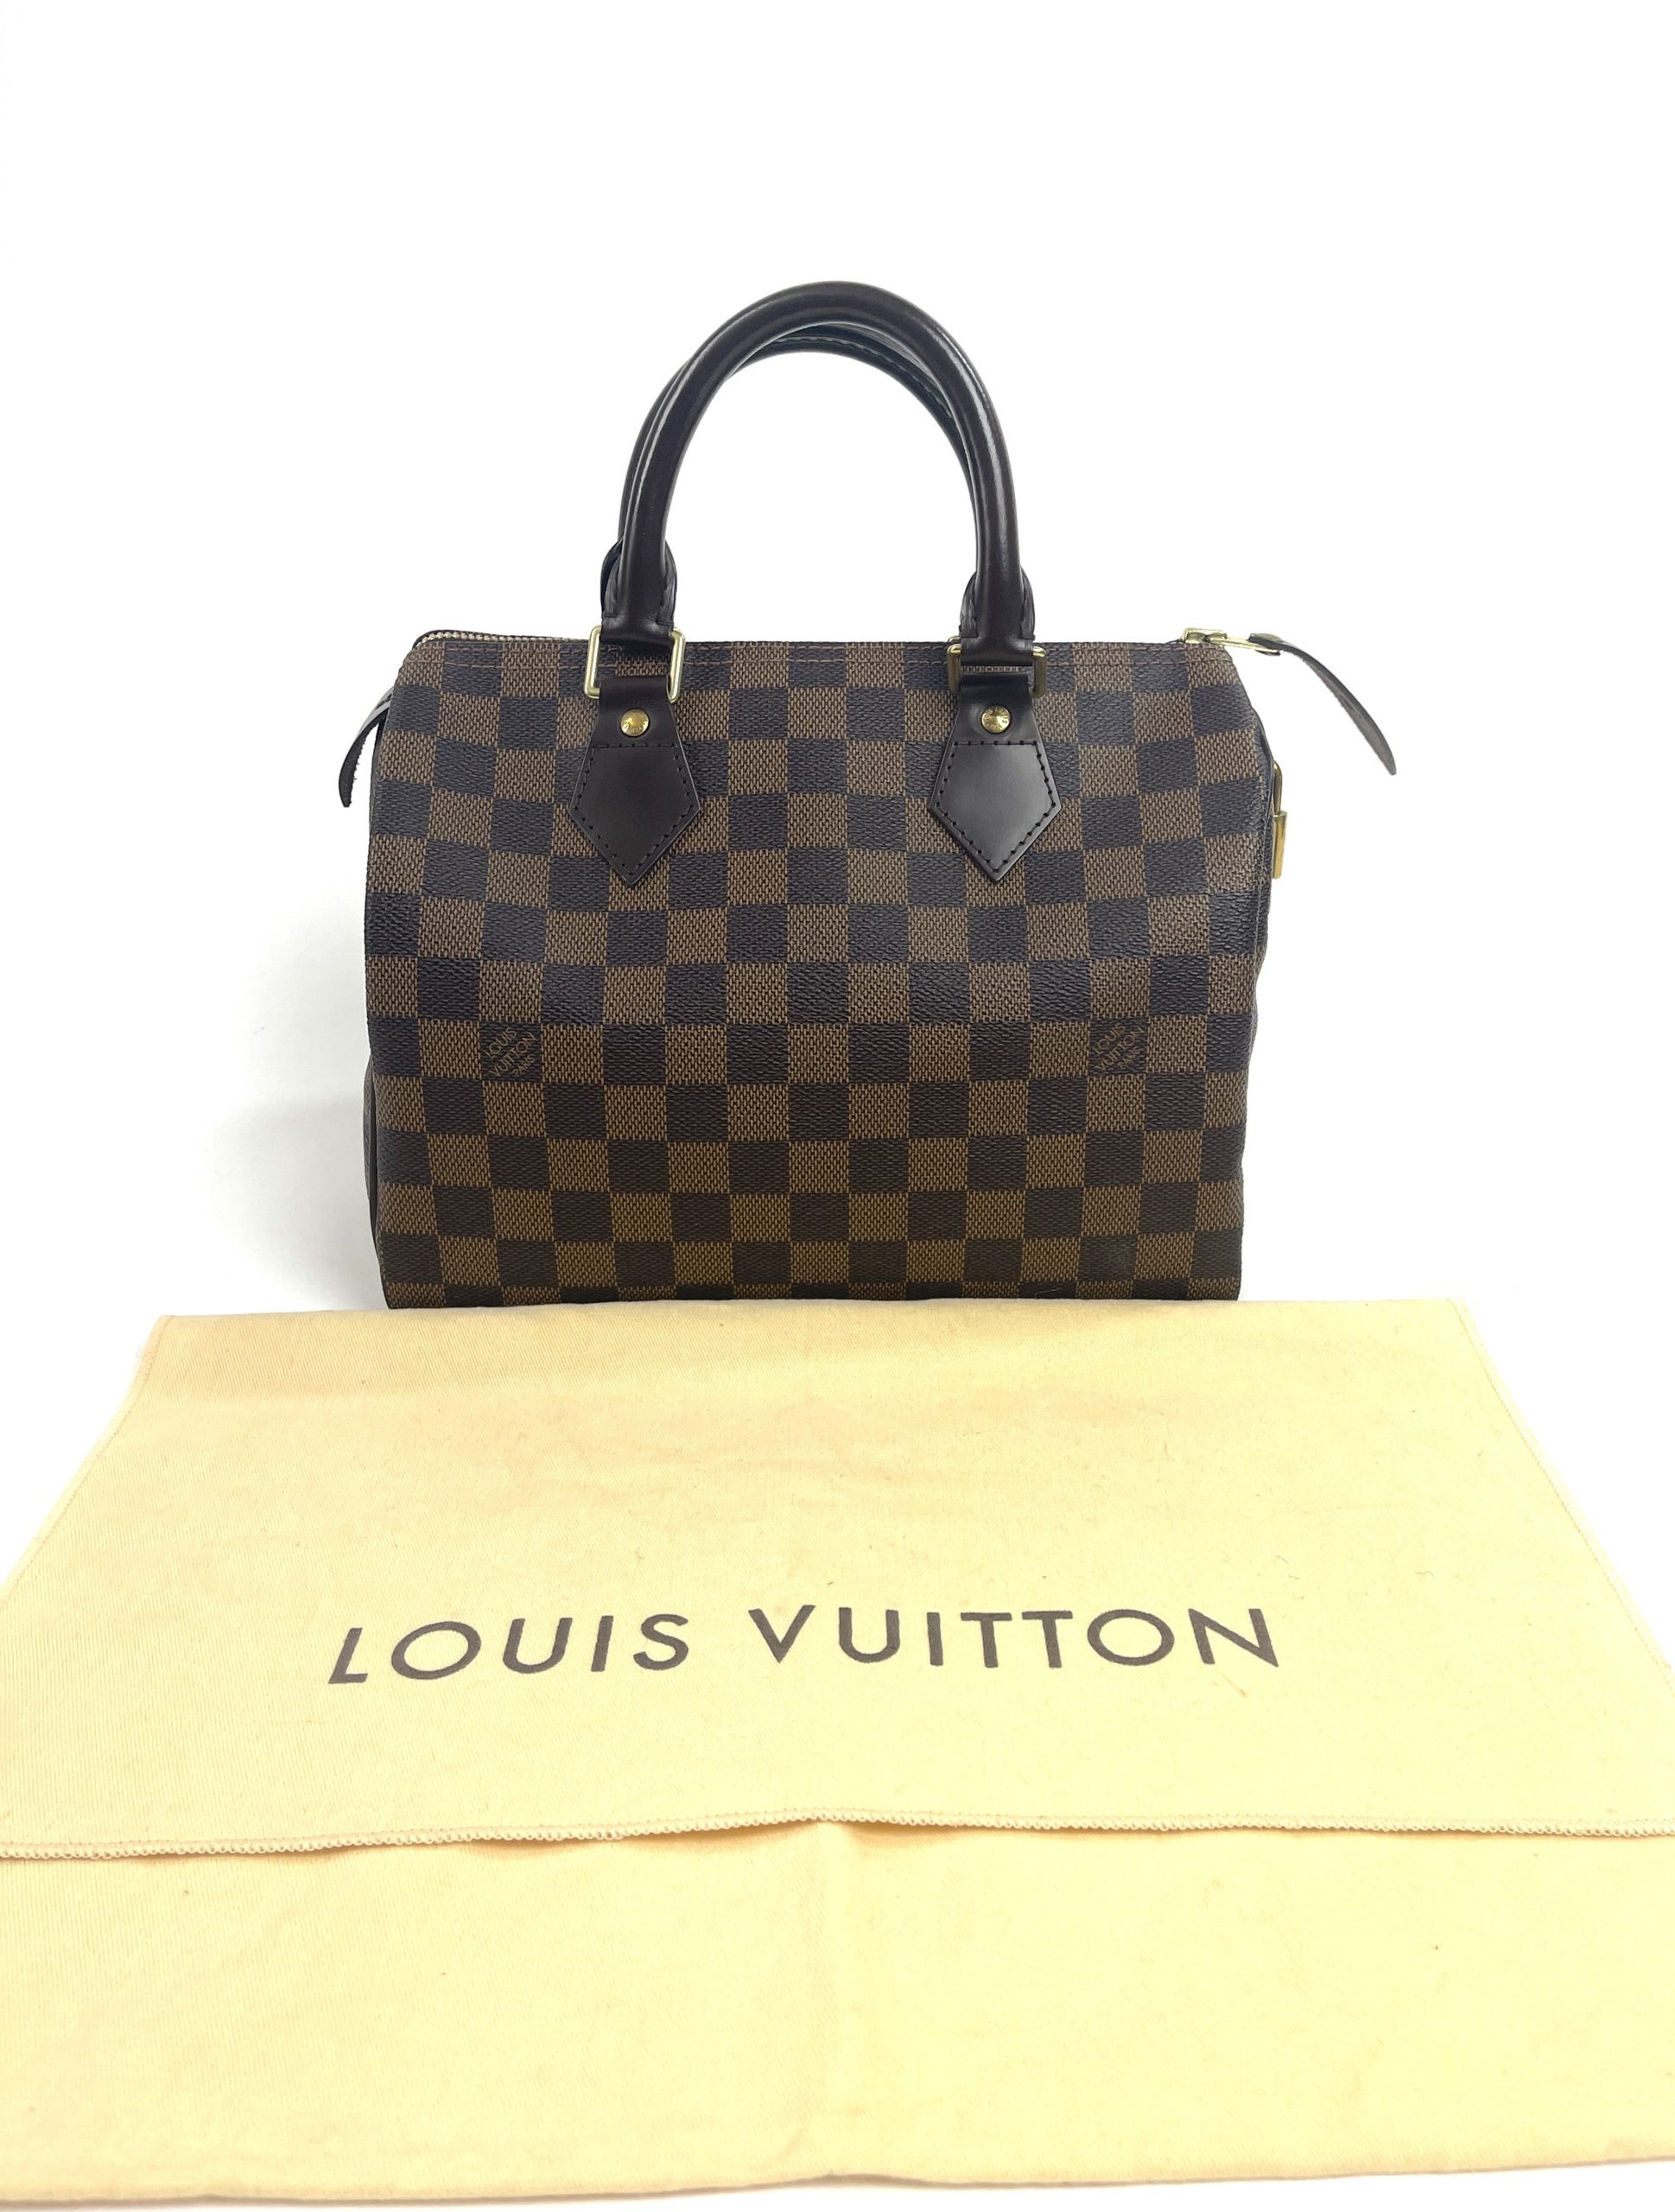 Authentic Louis Vuitton Speedy 25 Damier Ebene Satchel Handbag